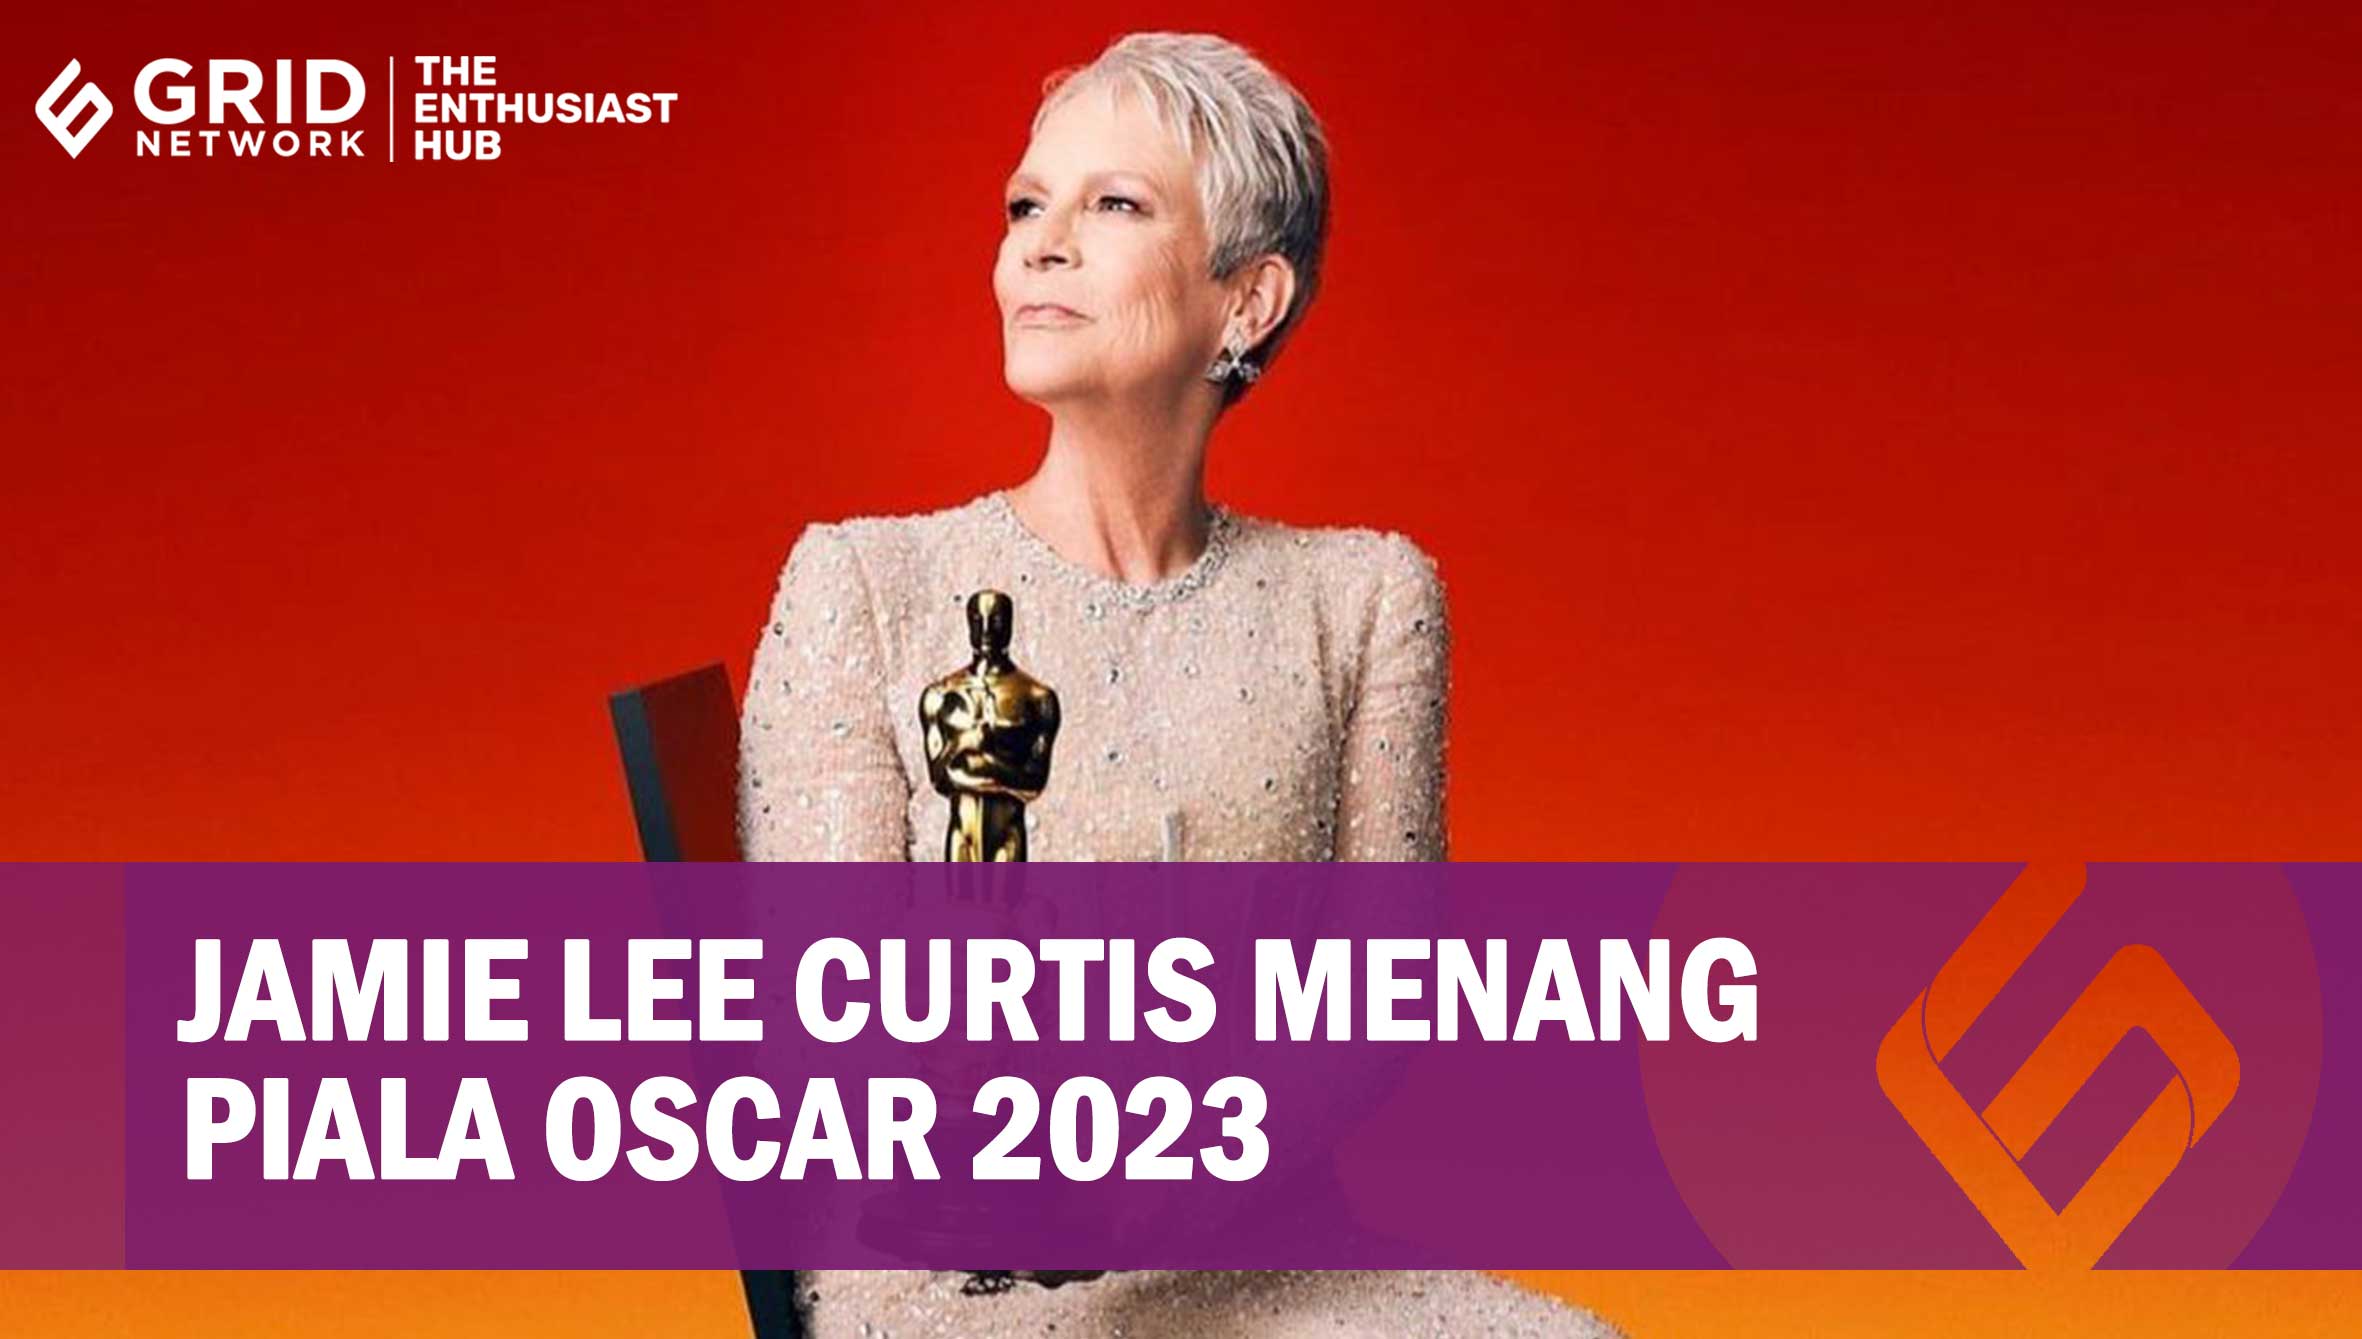 Jamie Lee Curtis Menang Piala Oscar 2023, Sampaikan Pidato Emosional